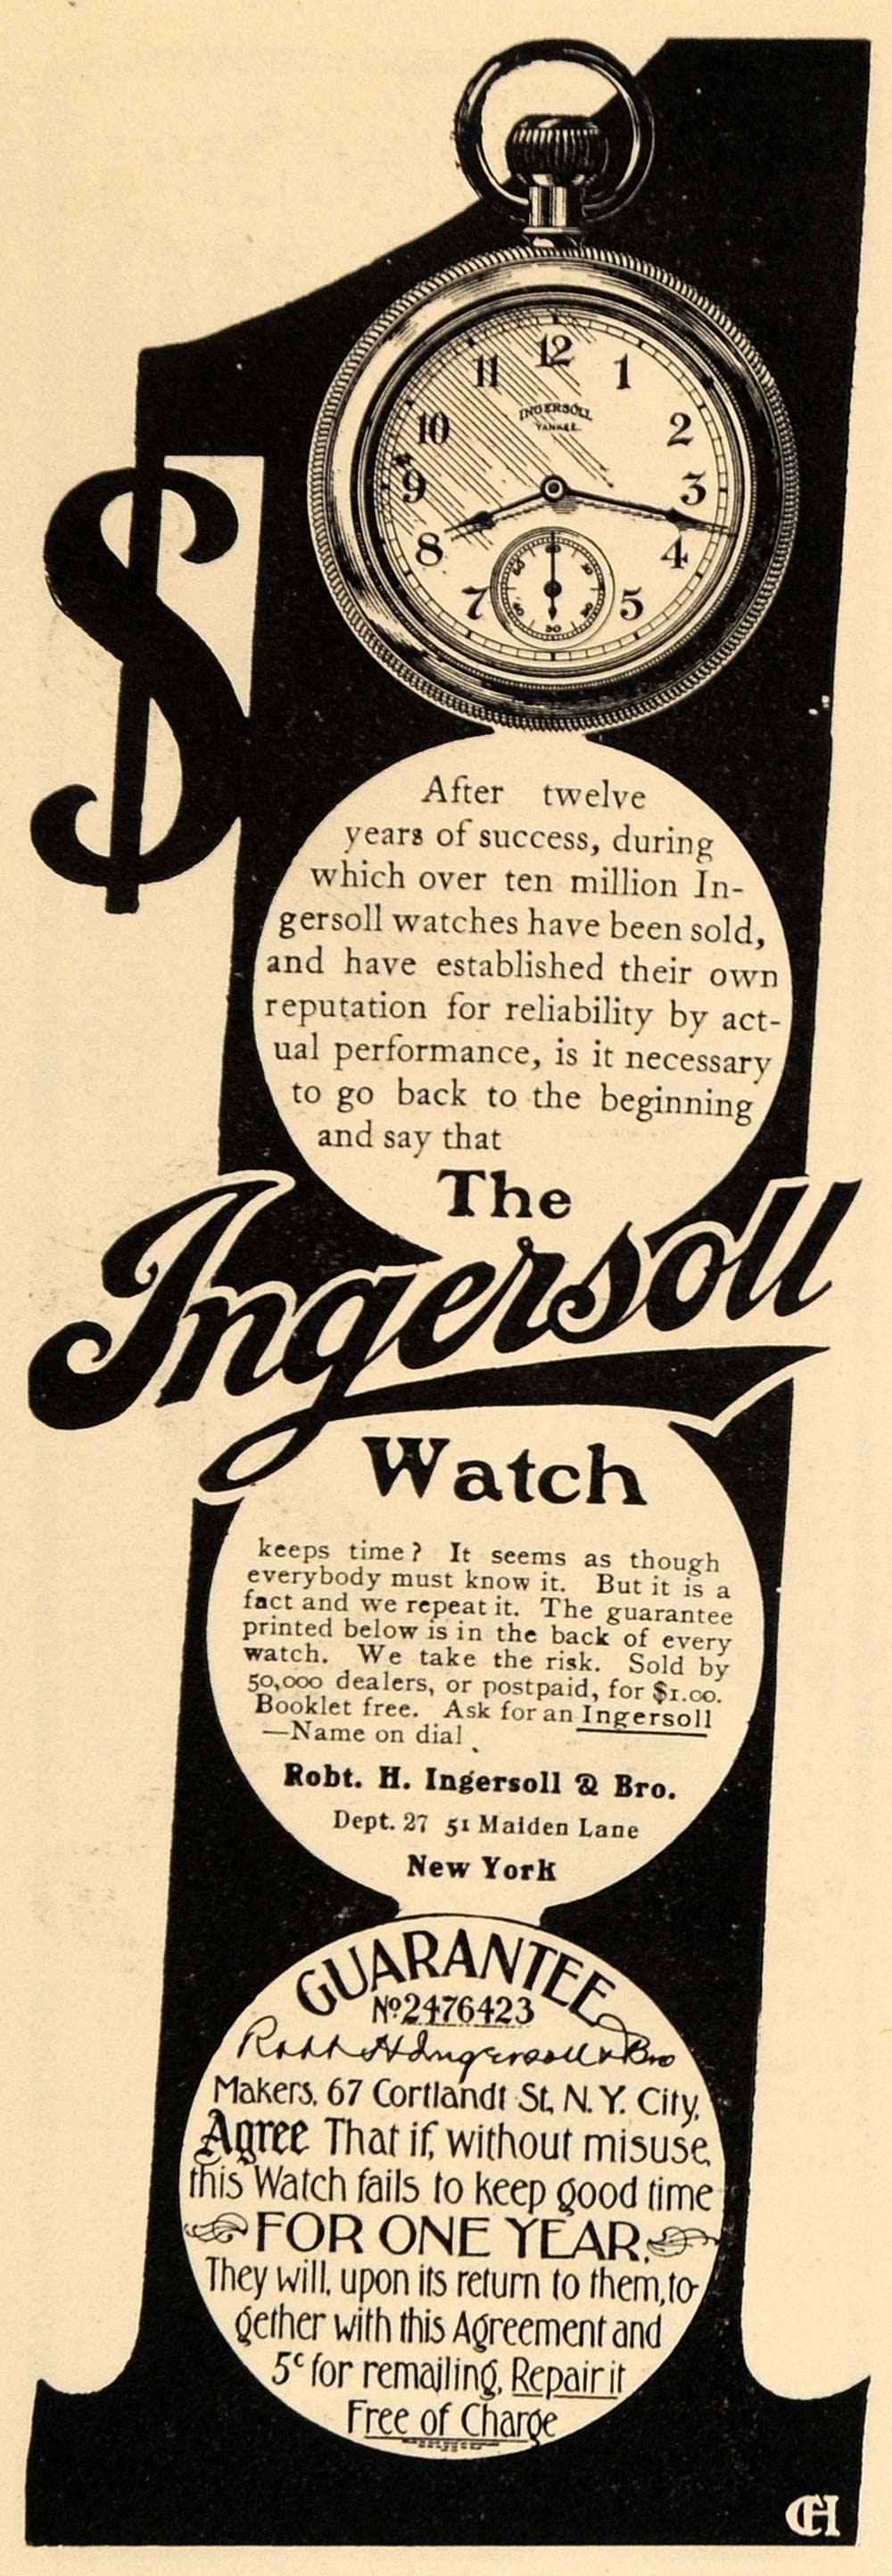 1905 Ad Robert H Ingersoll Pocket Watch 51 Maiden Ln NY - ORIGINAL EM2